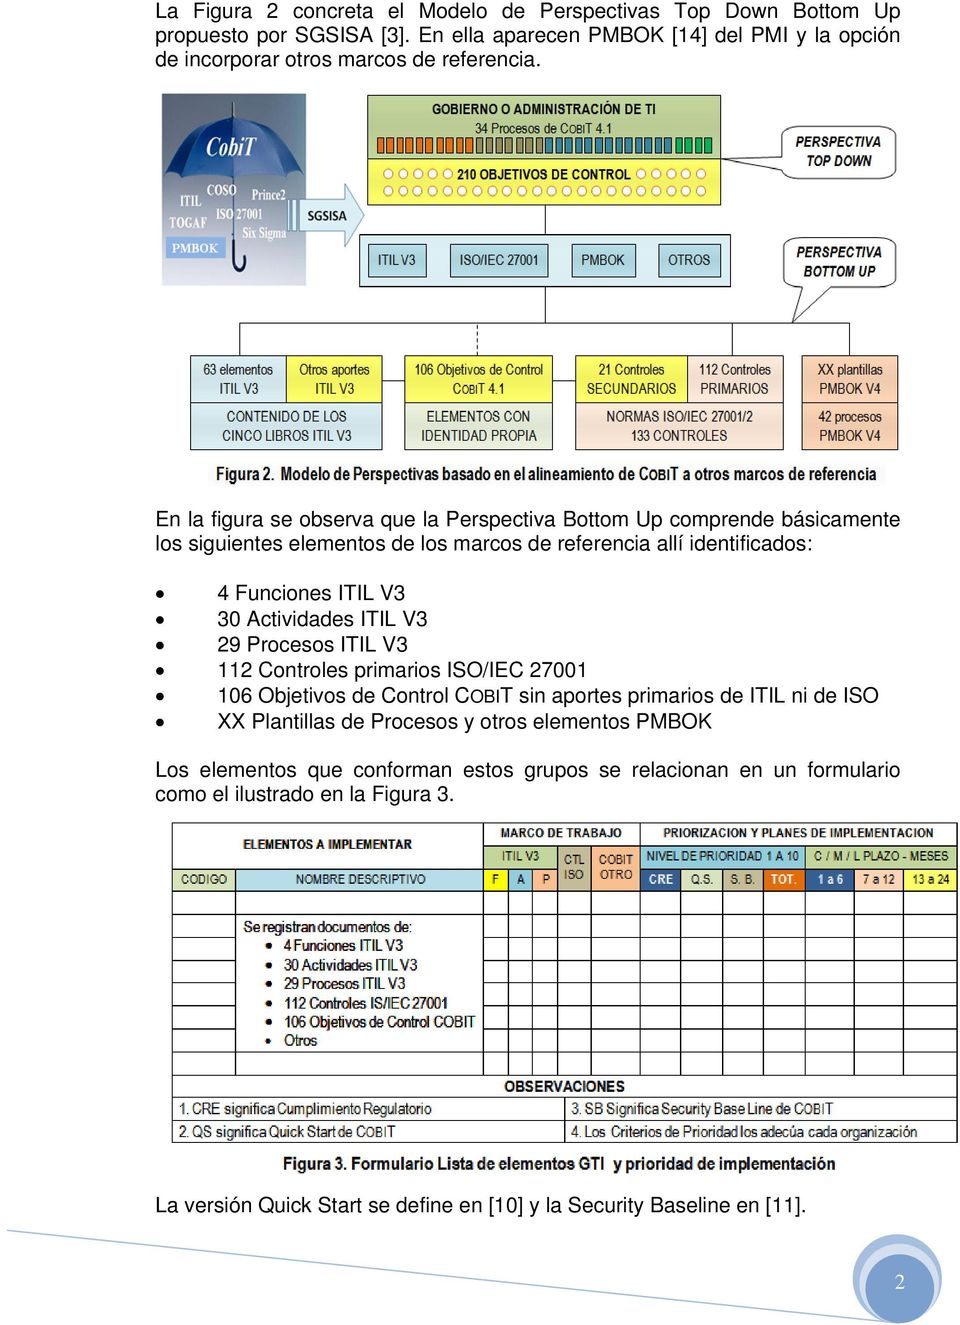 ITIL V3 29 Procesos ITIL V3 112 Controles primarios ISO/IEC 27001 106 Objetivos de Control COBIT sin aportes primarios de ITIL ni de ISO XX Plantillas de Procesos y otros elementos